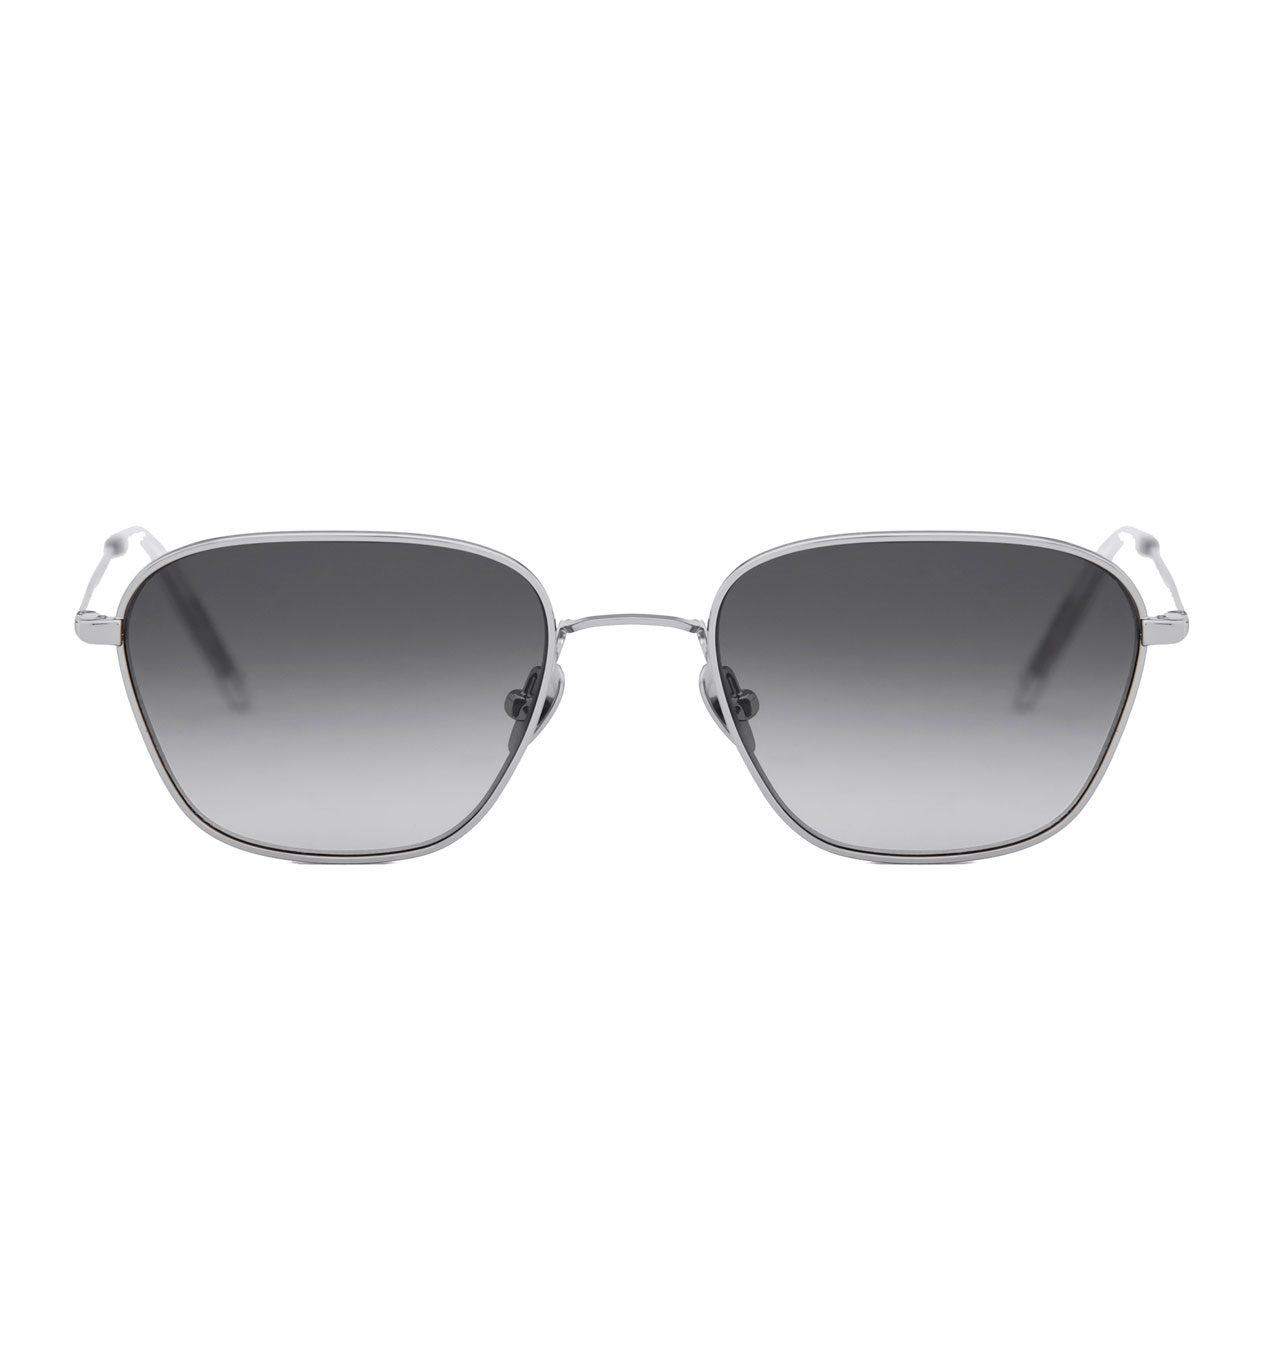 Monokel Eyewear - Otis Silver Sunglasses - Grey Gradient Lens